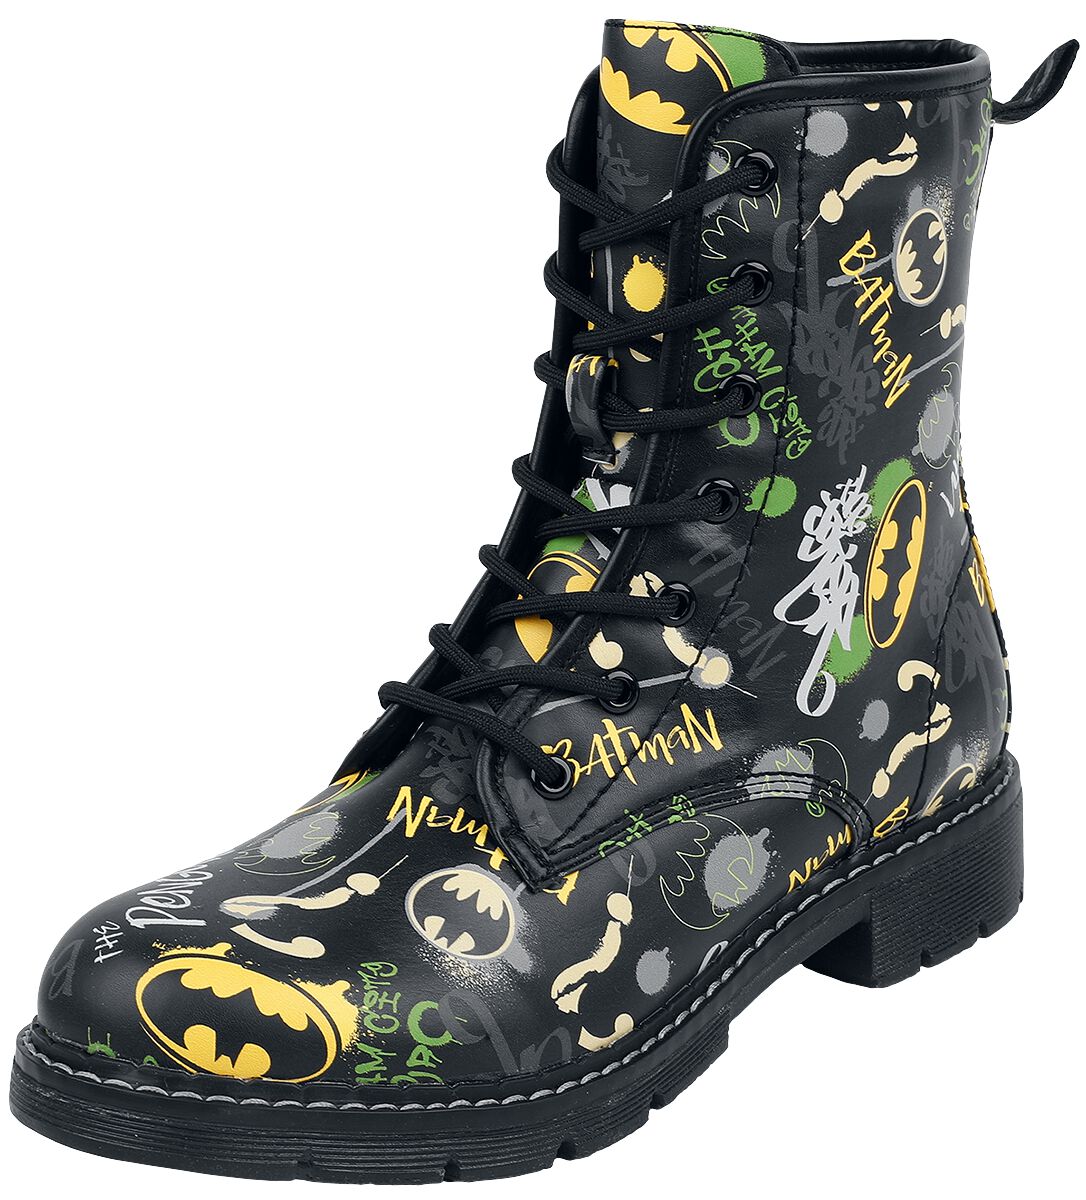 Batman - DC Comics Boot - Gotham - EU38 - für Damen - Größe EU38 - allover  - EMP exklusives Merchandise!